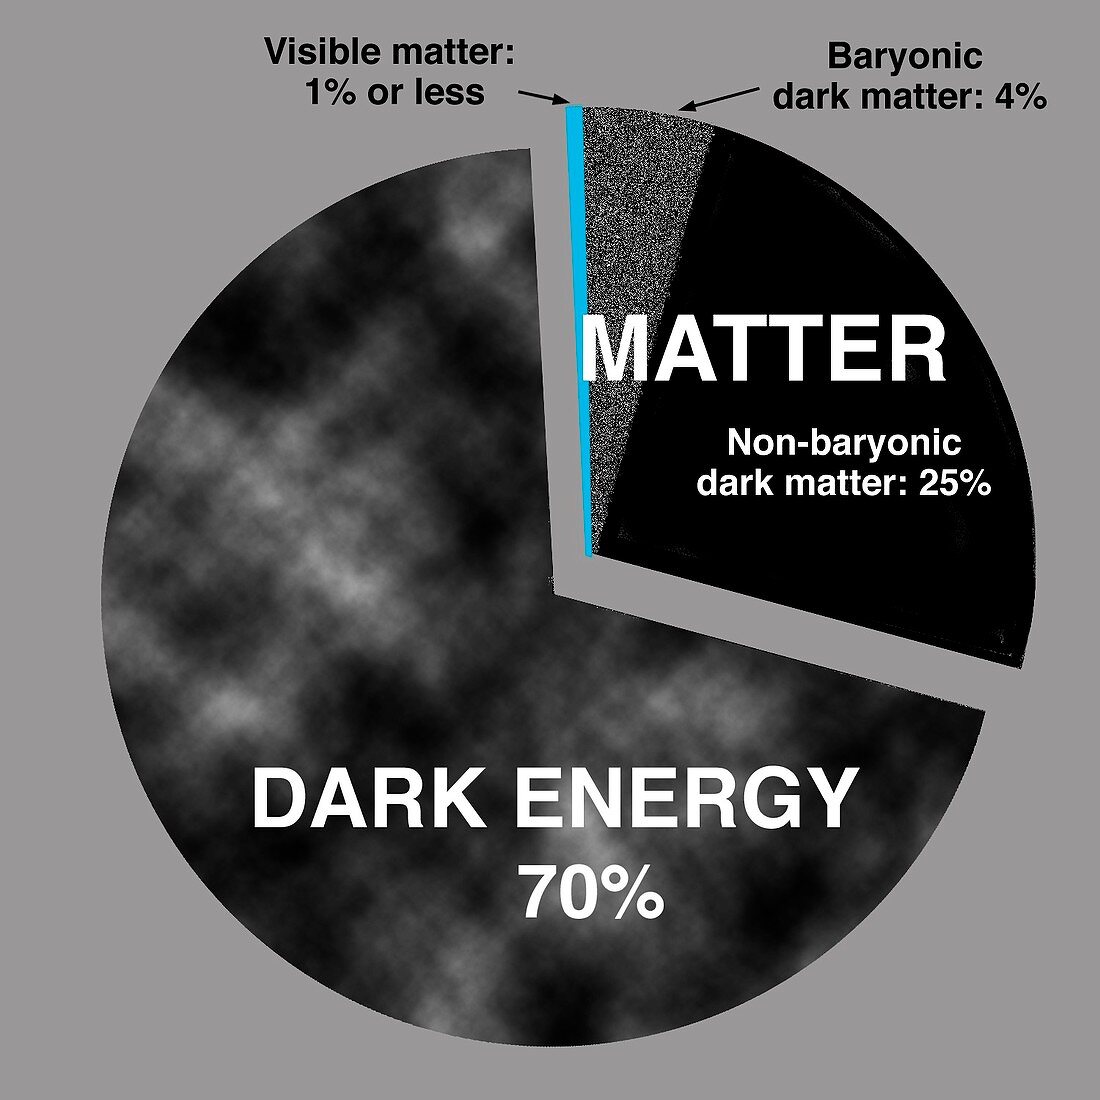 Universe's dark energy-matter content